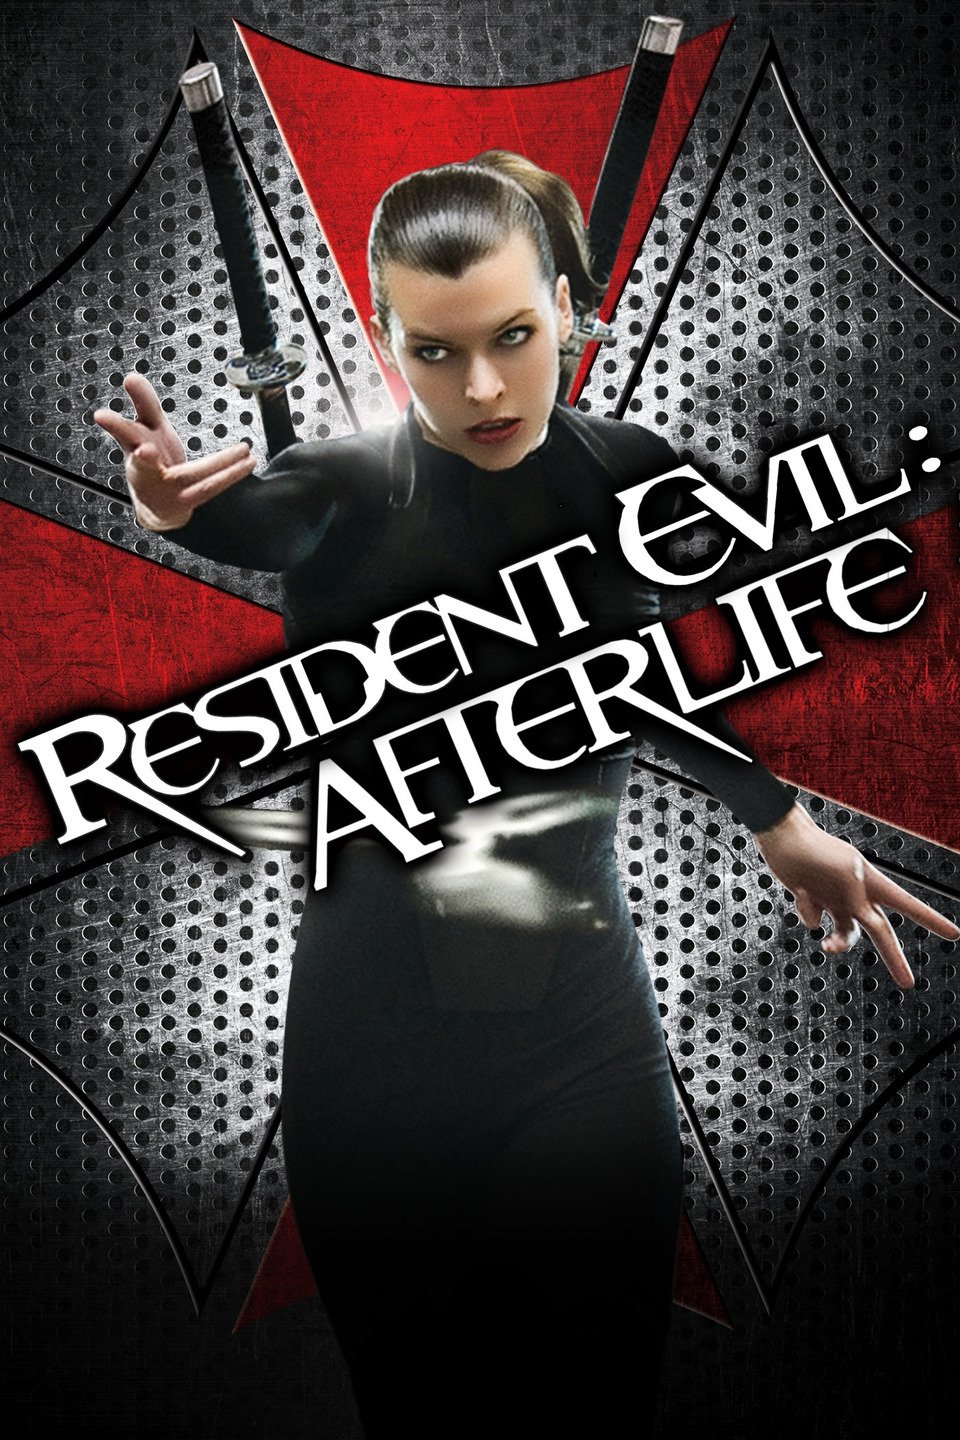 [MINI-HD] Resident Evil: Afterlife (2010) ผีชีวะ 4 สงครามแตกพันธุ์ไวรัส [1080p] [พากย์ไทย DTS + อังกฤษ DTS] [BrRip.DTS.x264] [บรรยายไทย + อังกฤษ] [เสียงไทย + ซับไทย] [ONE2UP]